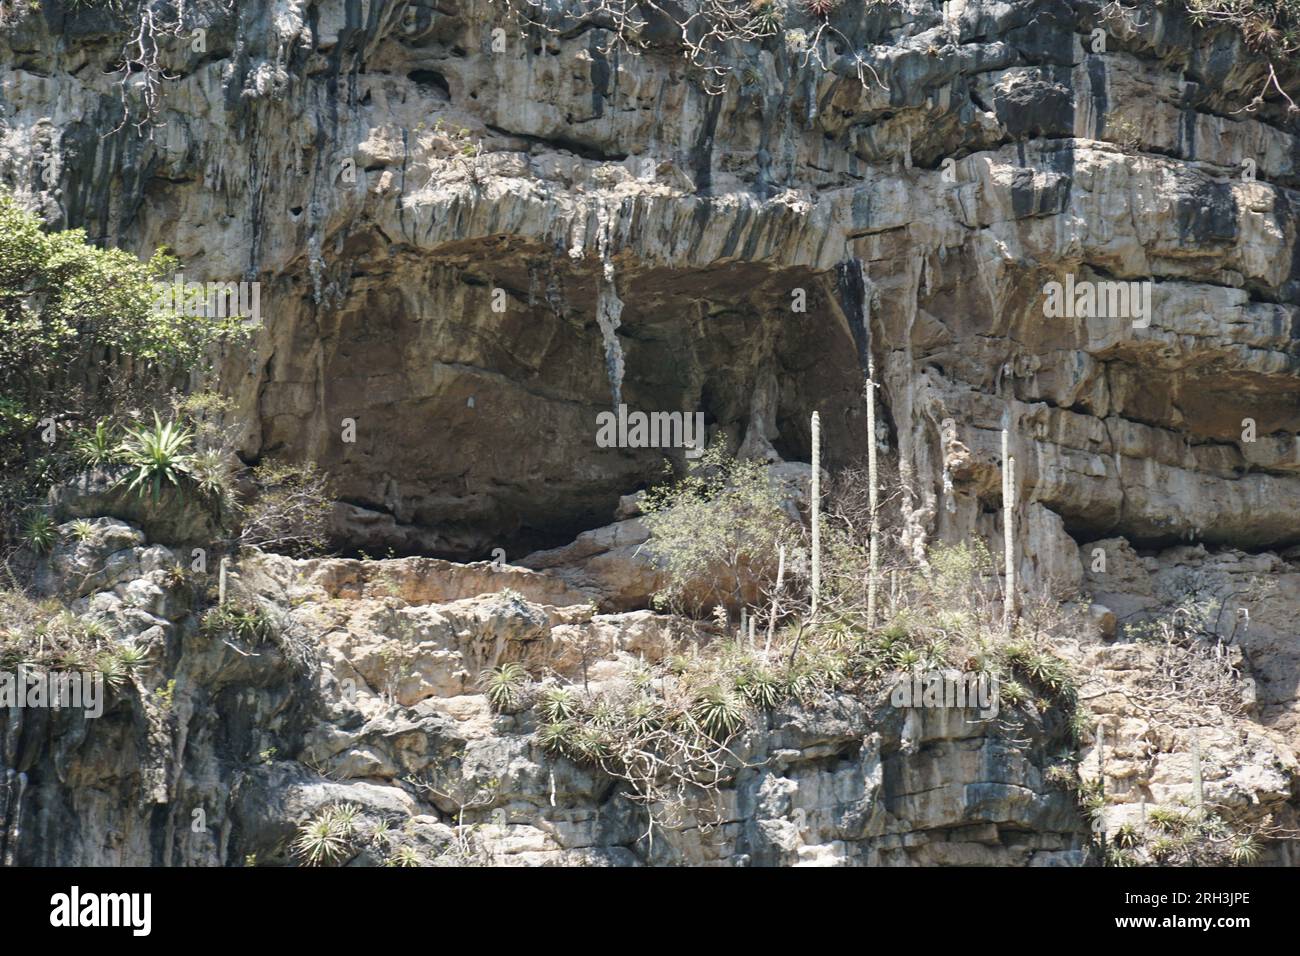 Seahorse, limestone formation, vegetation, trees, sumidero canyon. at chiapas, mexico Stock Photo